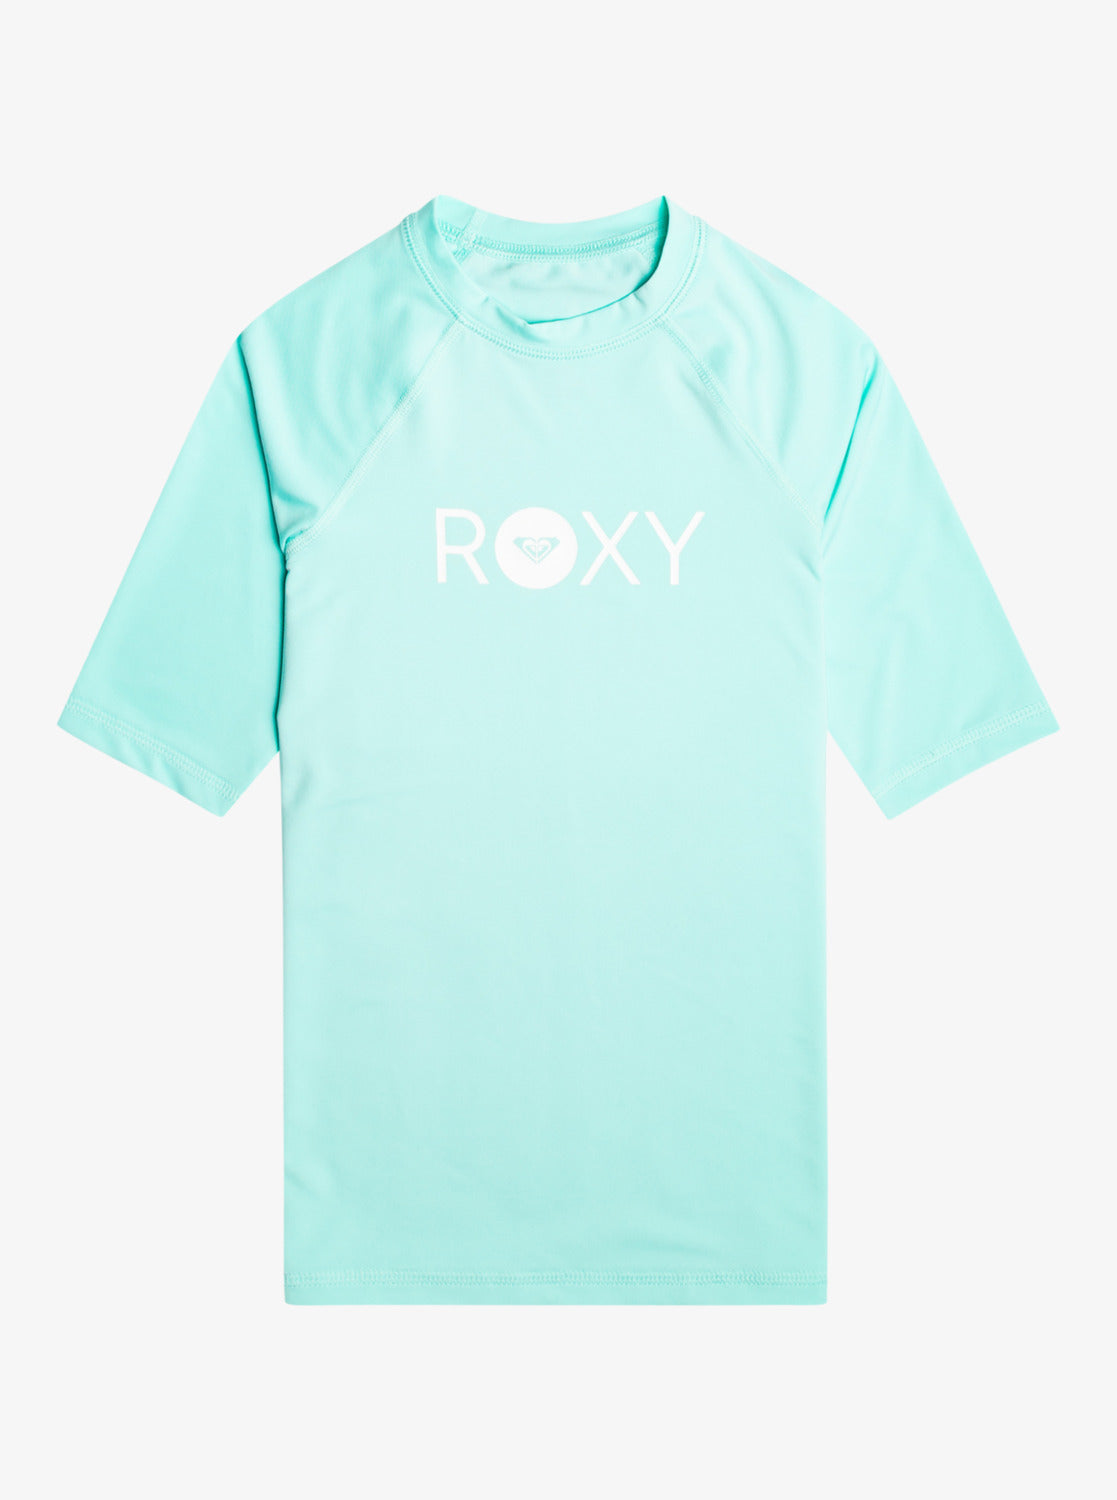 Roxy Essentials SS Lycra Kids - Arubra Blue